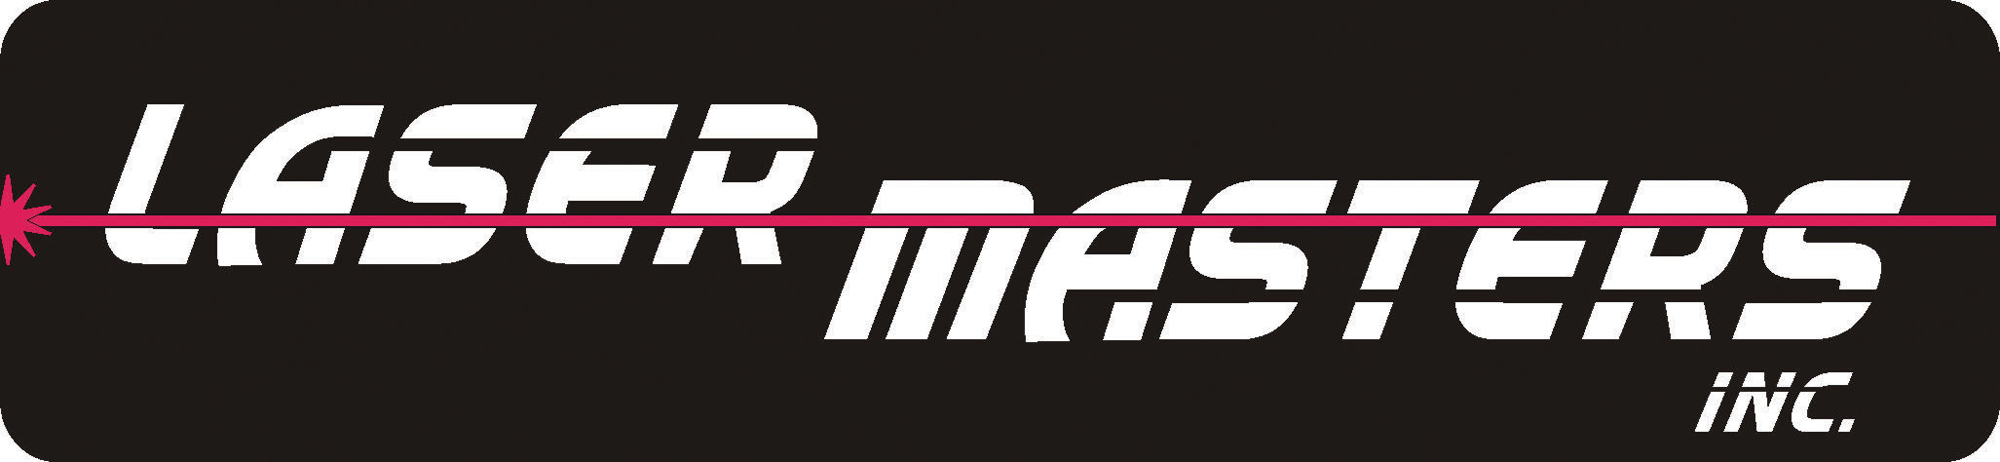 Laser Masters Inc. logo